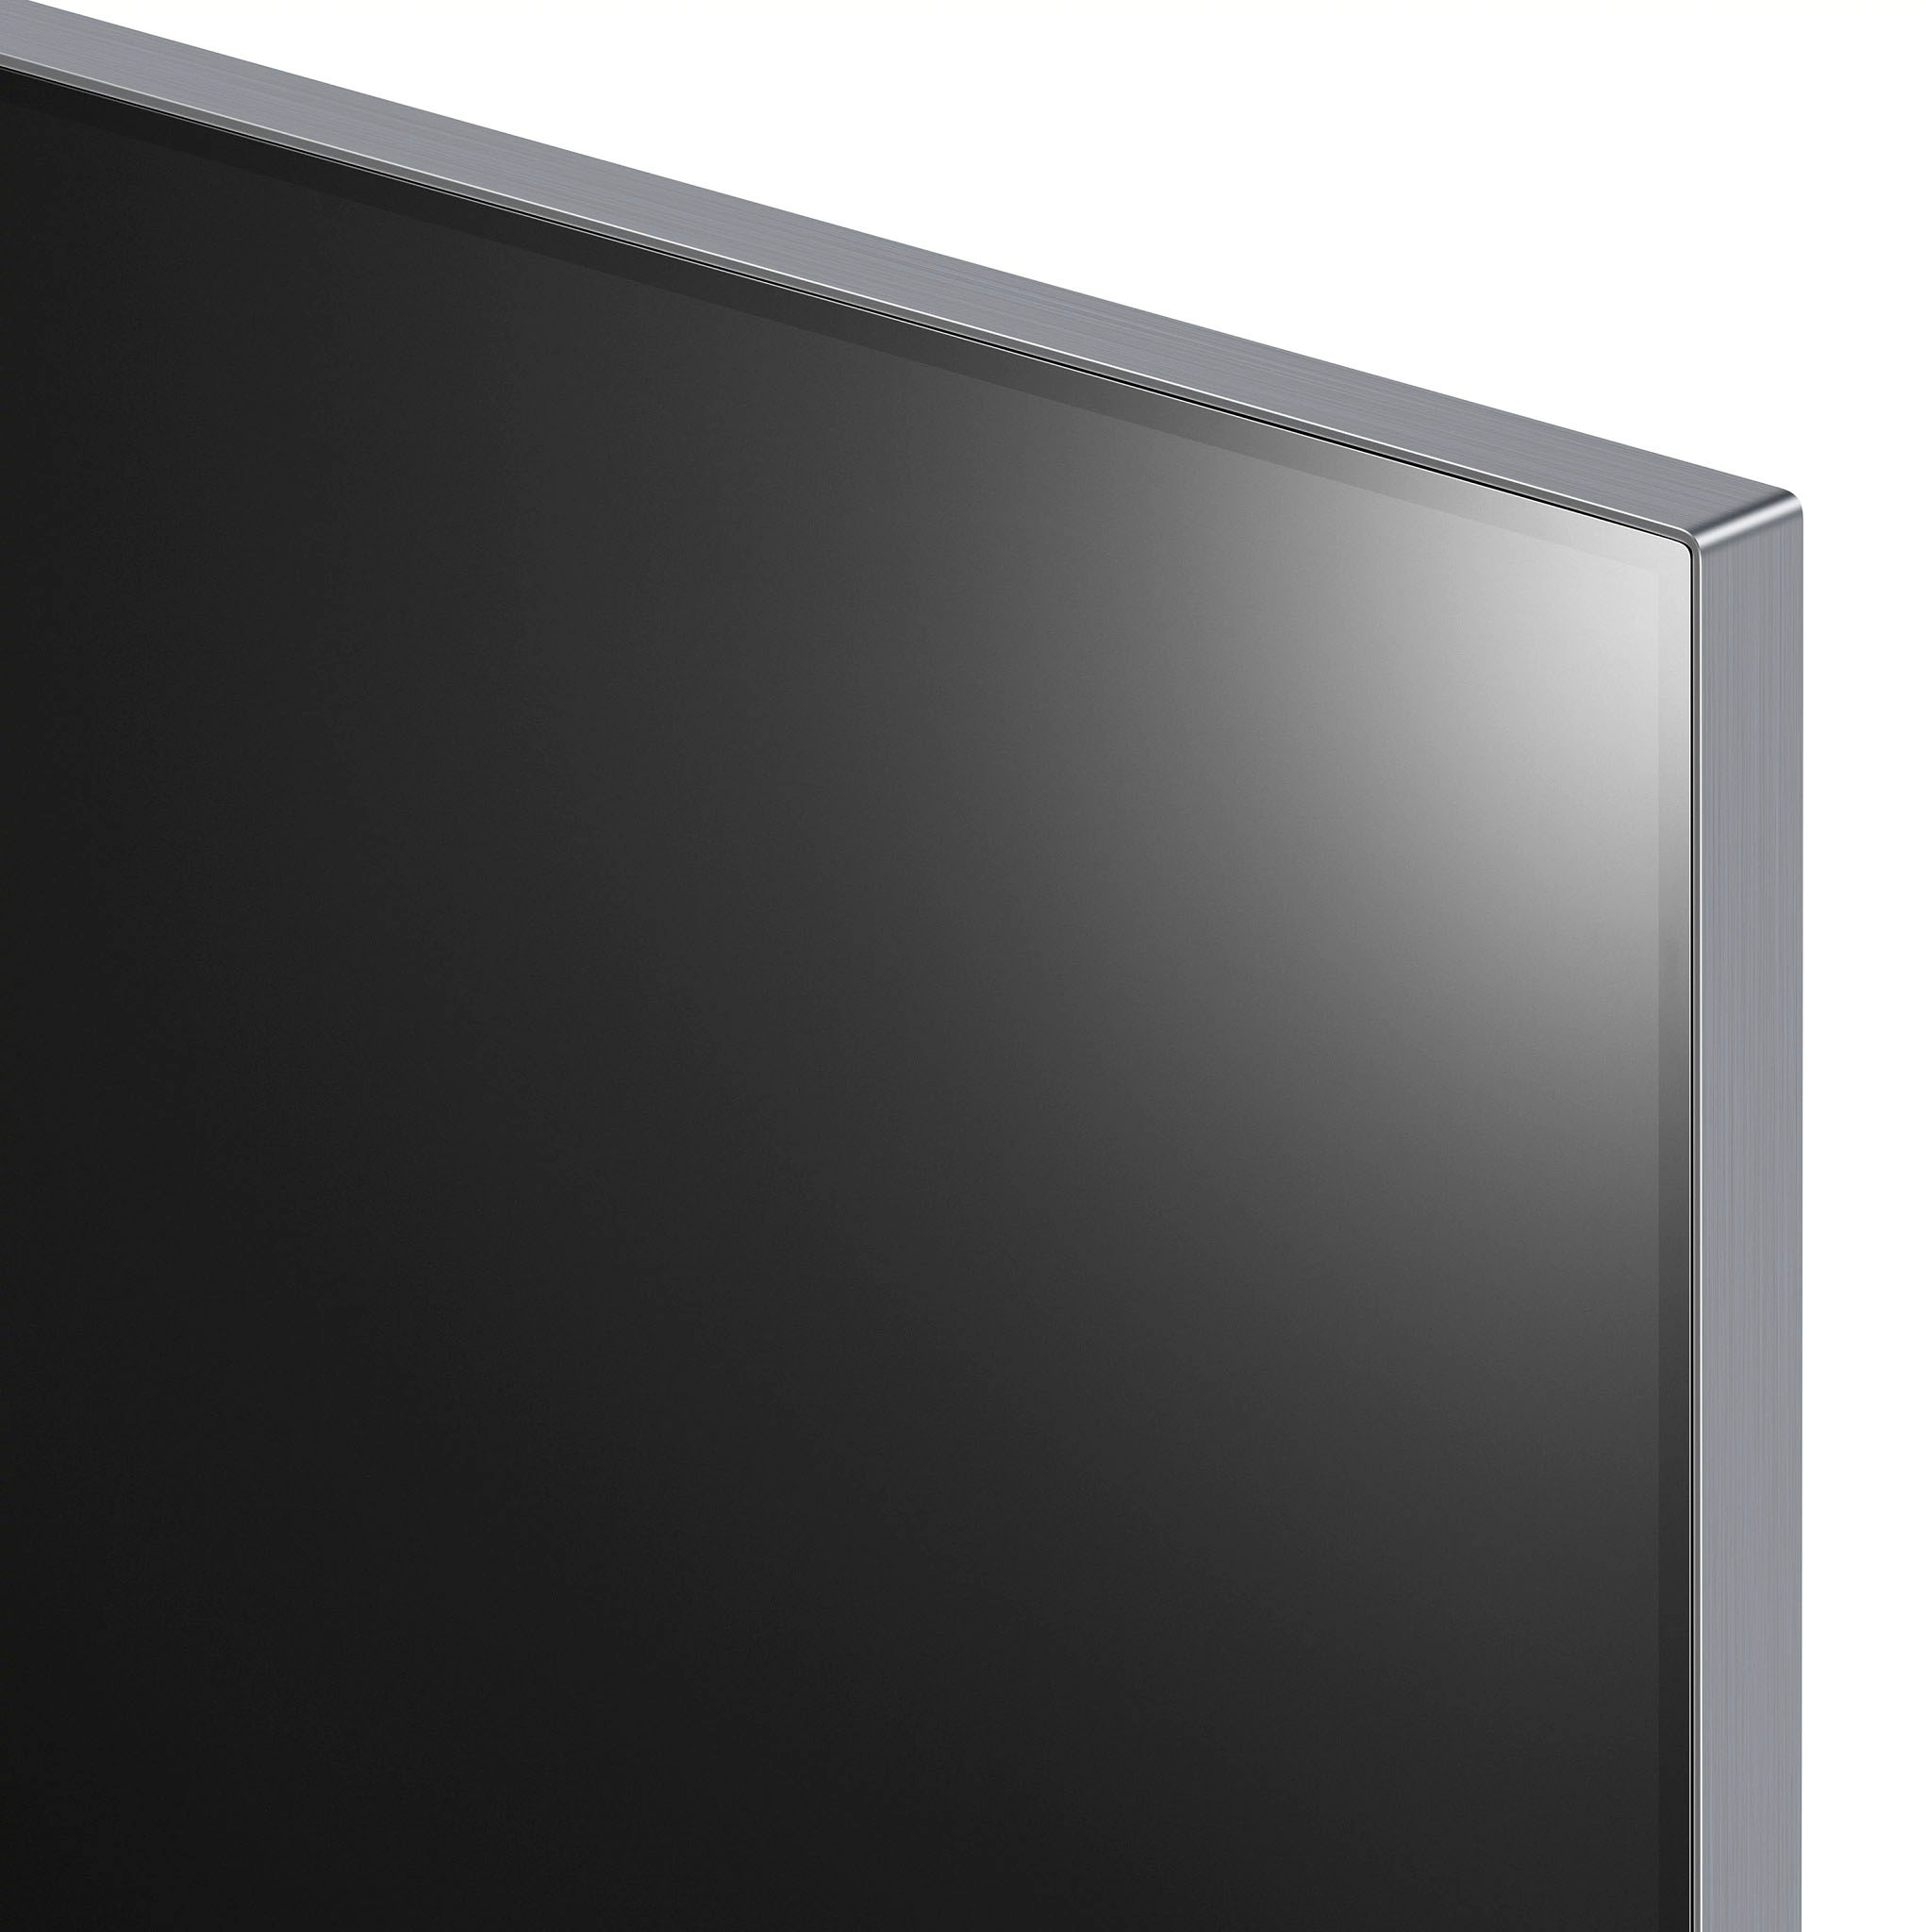 LG Serie G3 de 65 pulgadas Class OLED evo 4K Processor Smart TV de pantalla  plana para juegos con Magic Remote AI Powered Gallery Edition OLED65G3PUA